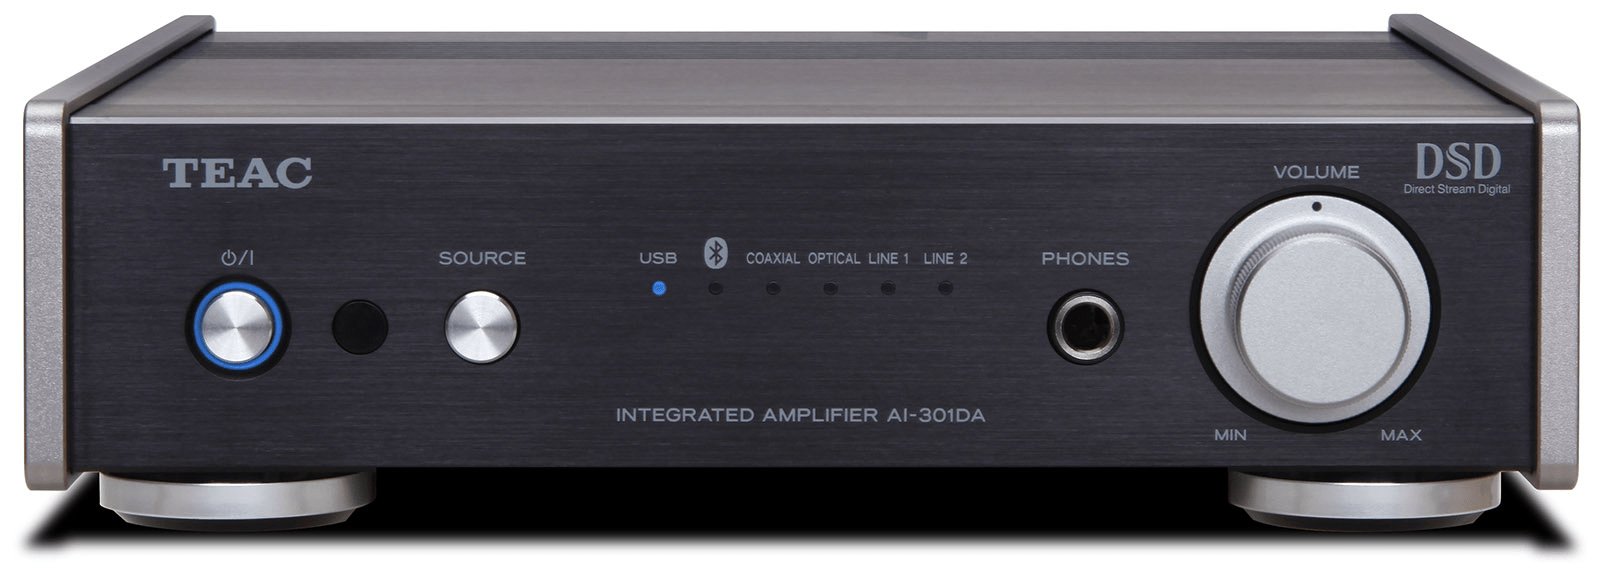 TEAC AI-301DA-X Integrated Amplifier - The Audio Co.